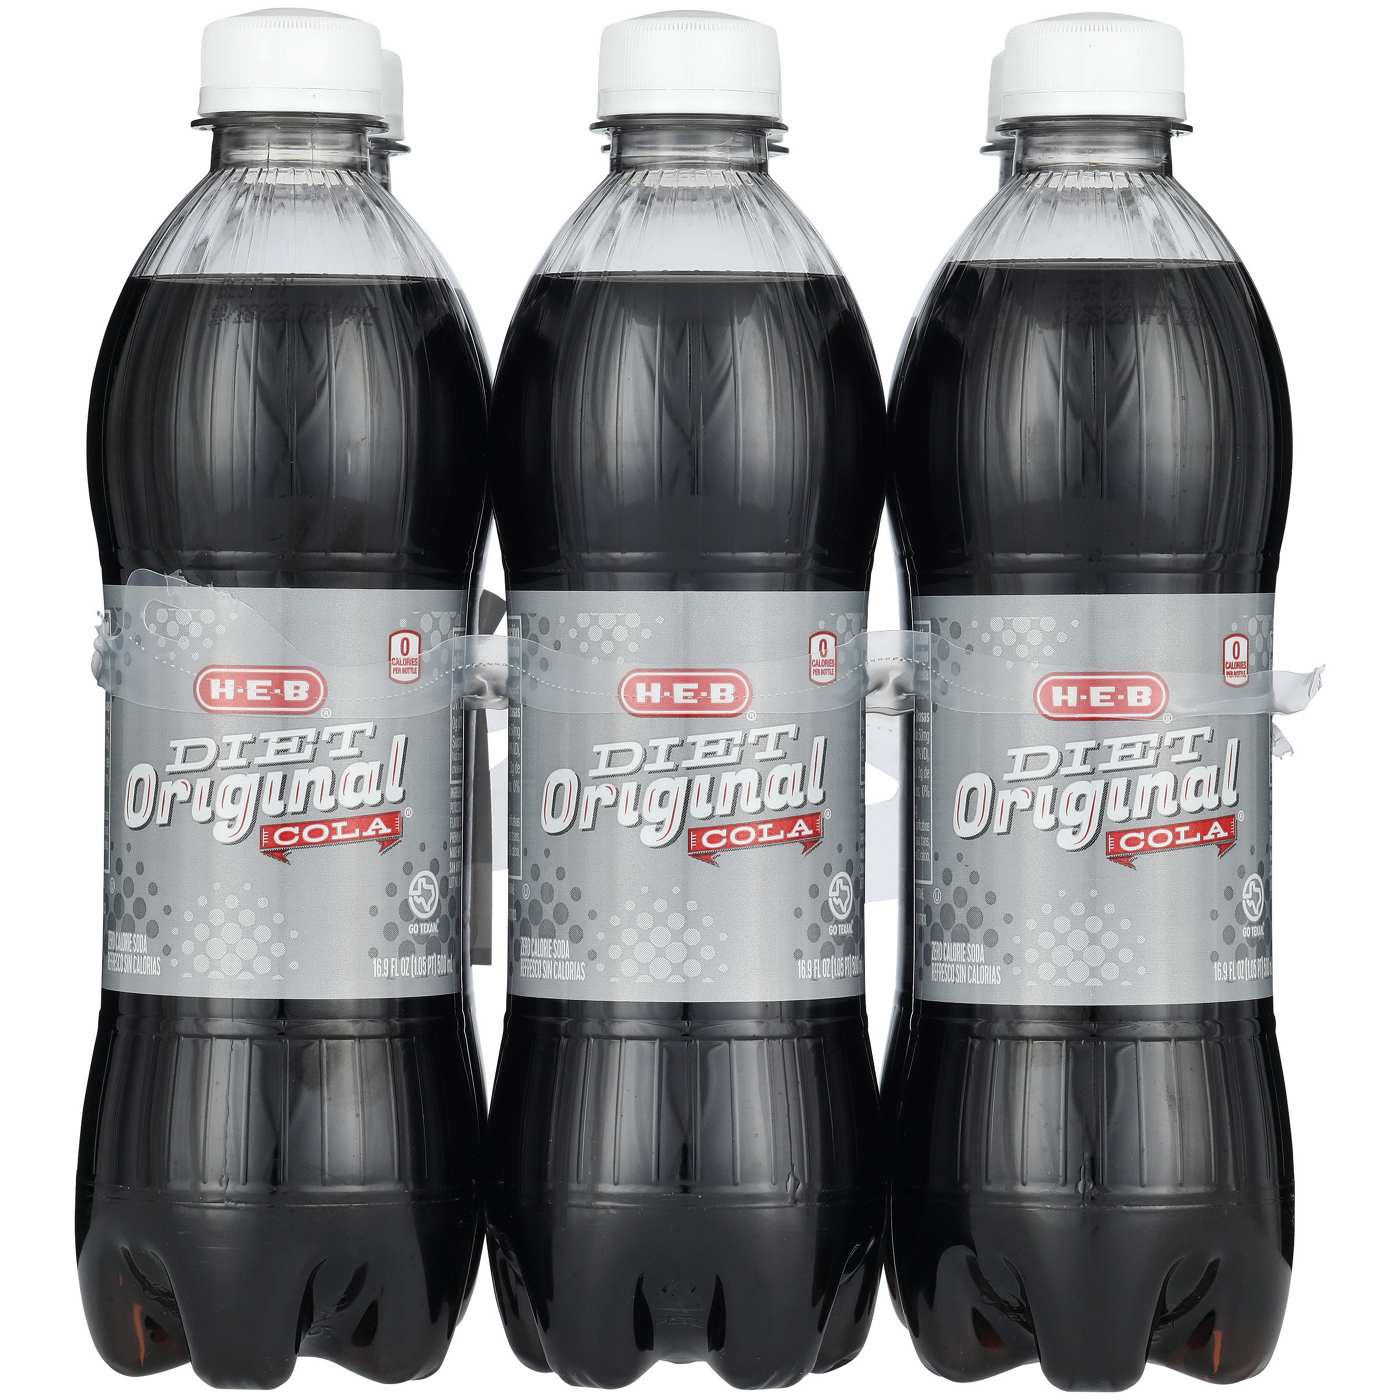 H-E-B Diet Original Cola 6 pk Bottles; image 1 of 2